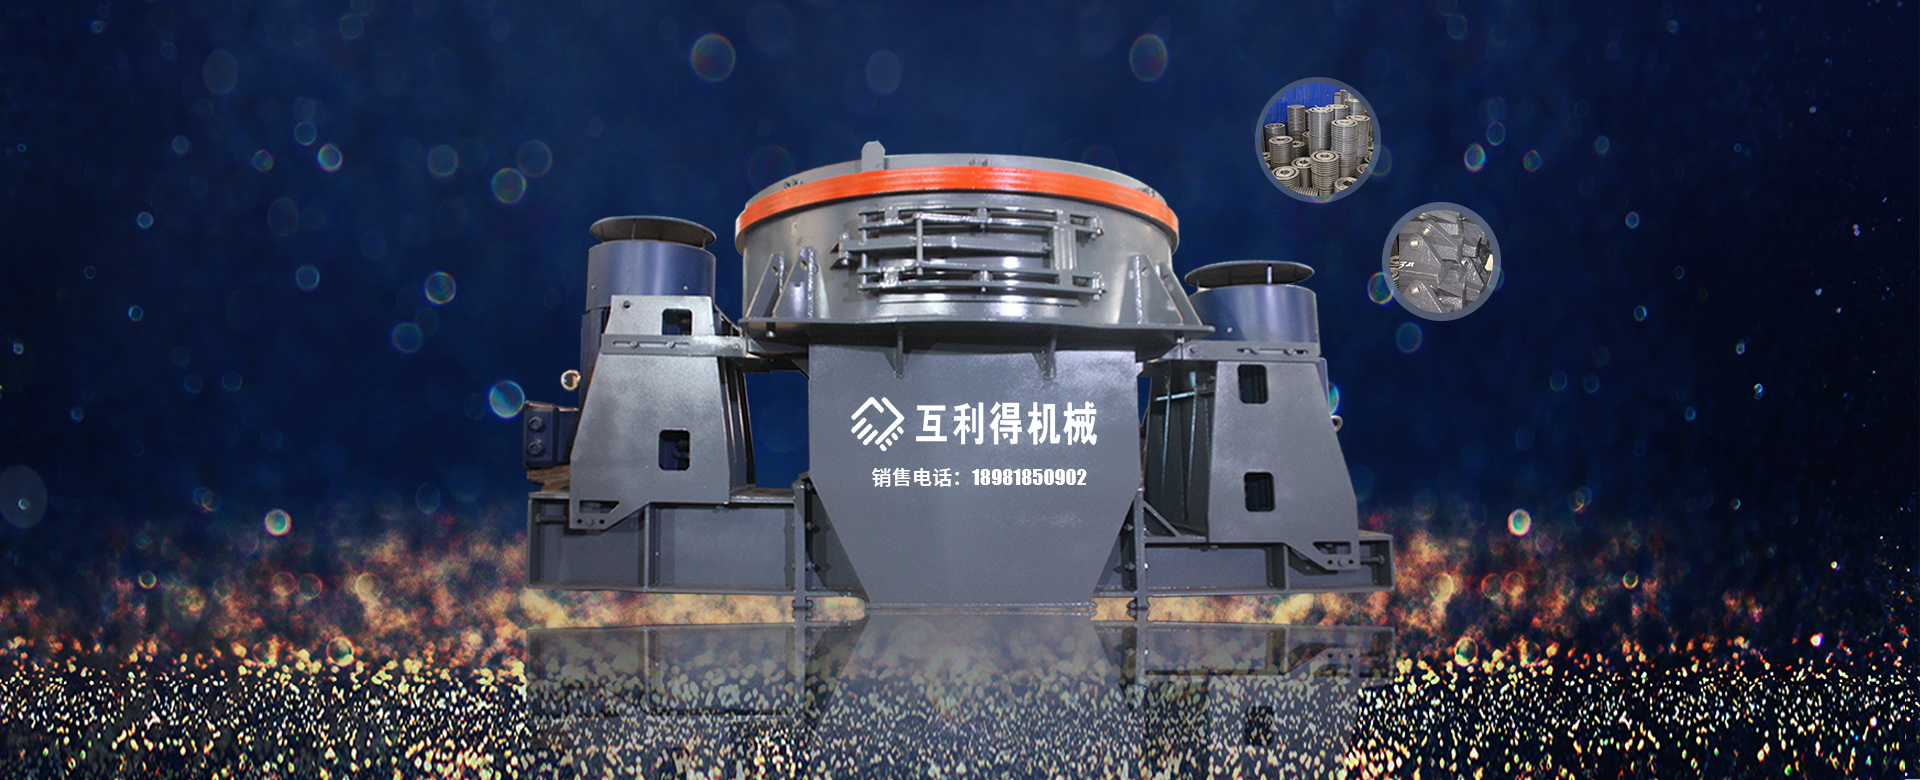 Sichuan Huilide Machinery Equipment Co., Ltd.